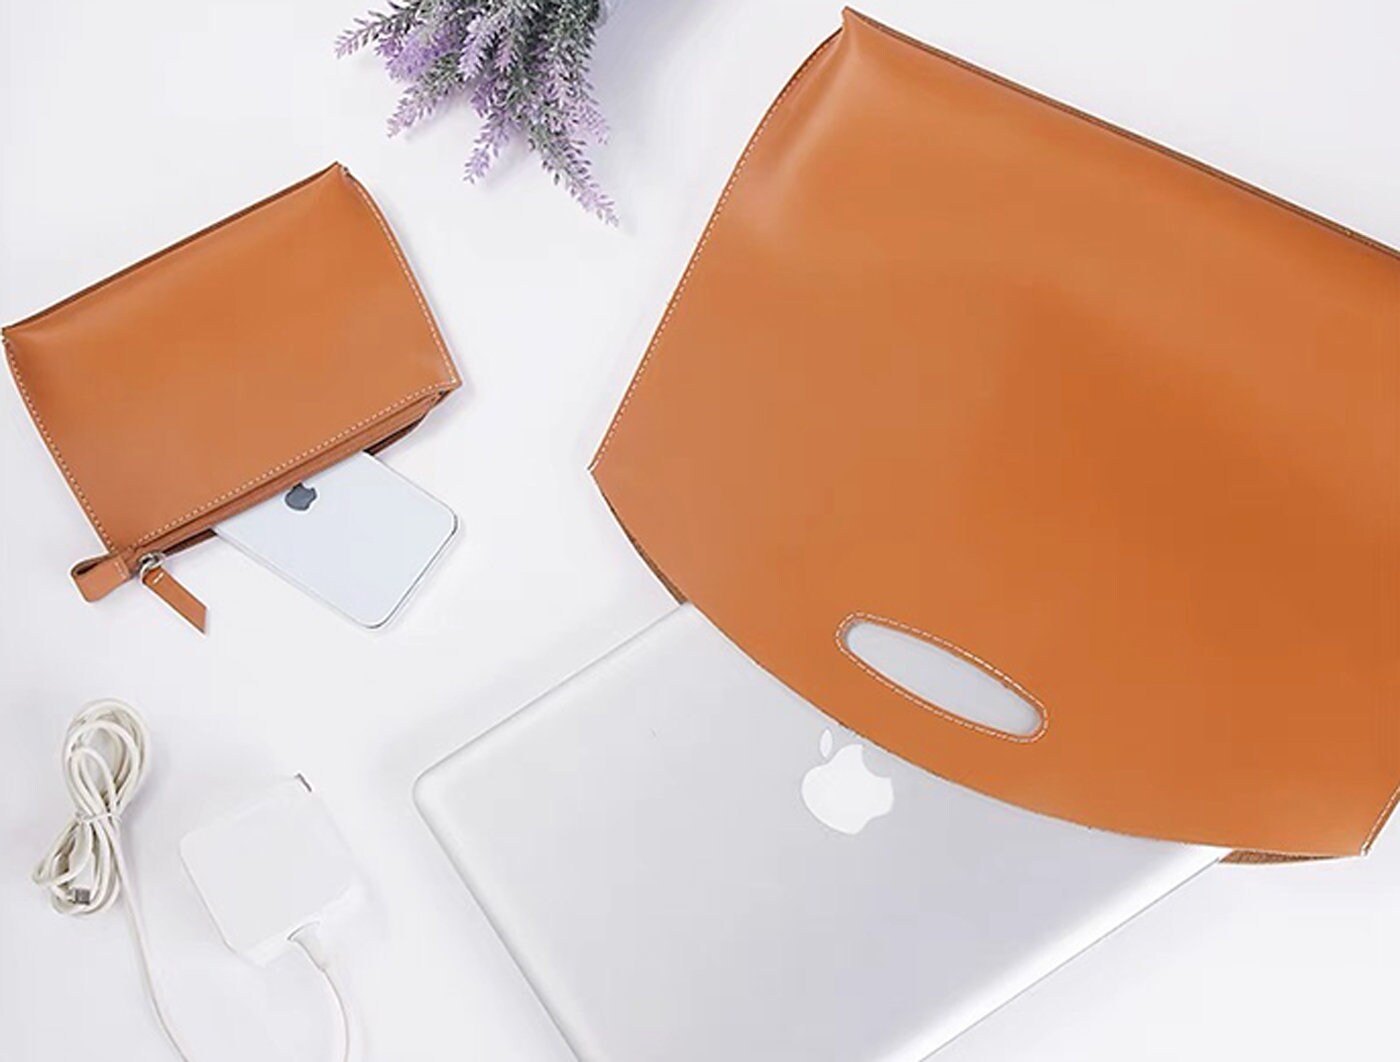 Minimalist Leather Laptop Case Bag/Back To Work Gift/Unique Laptop Sleeve